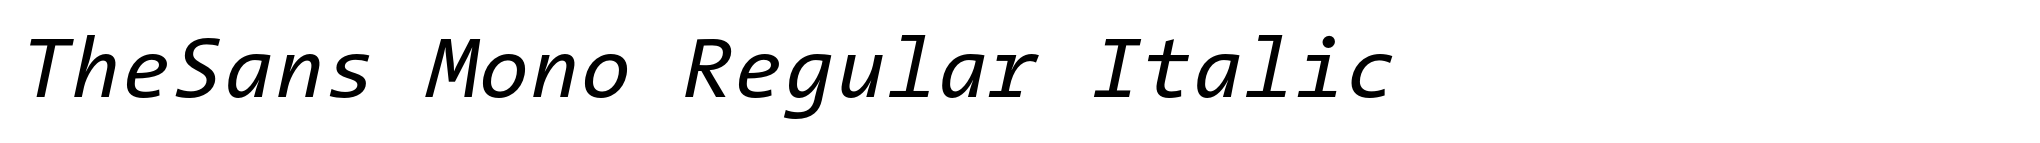 TheSans Mono Regular Italic image